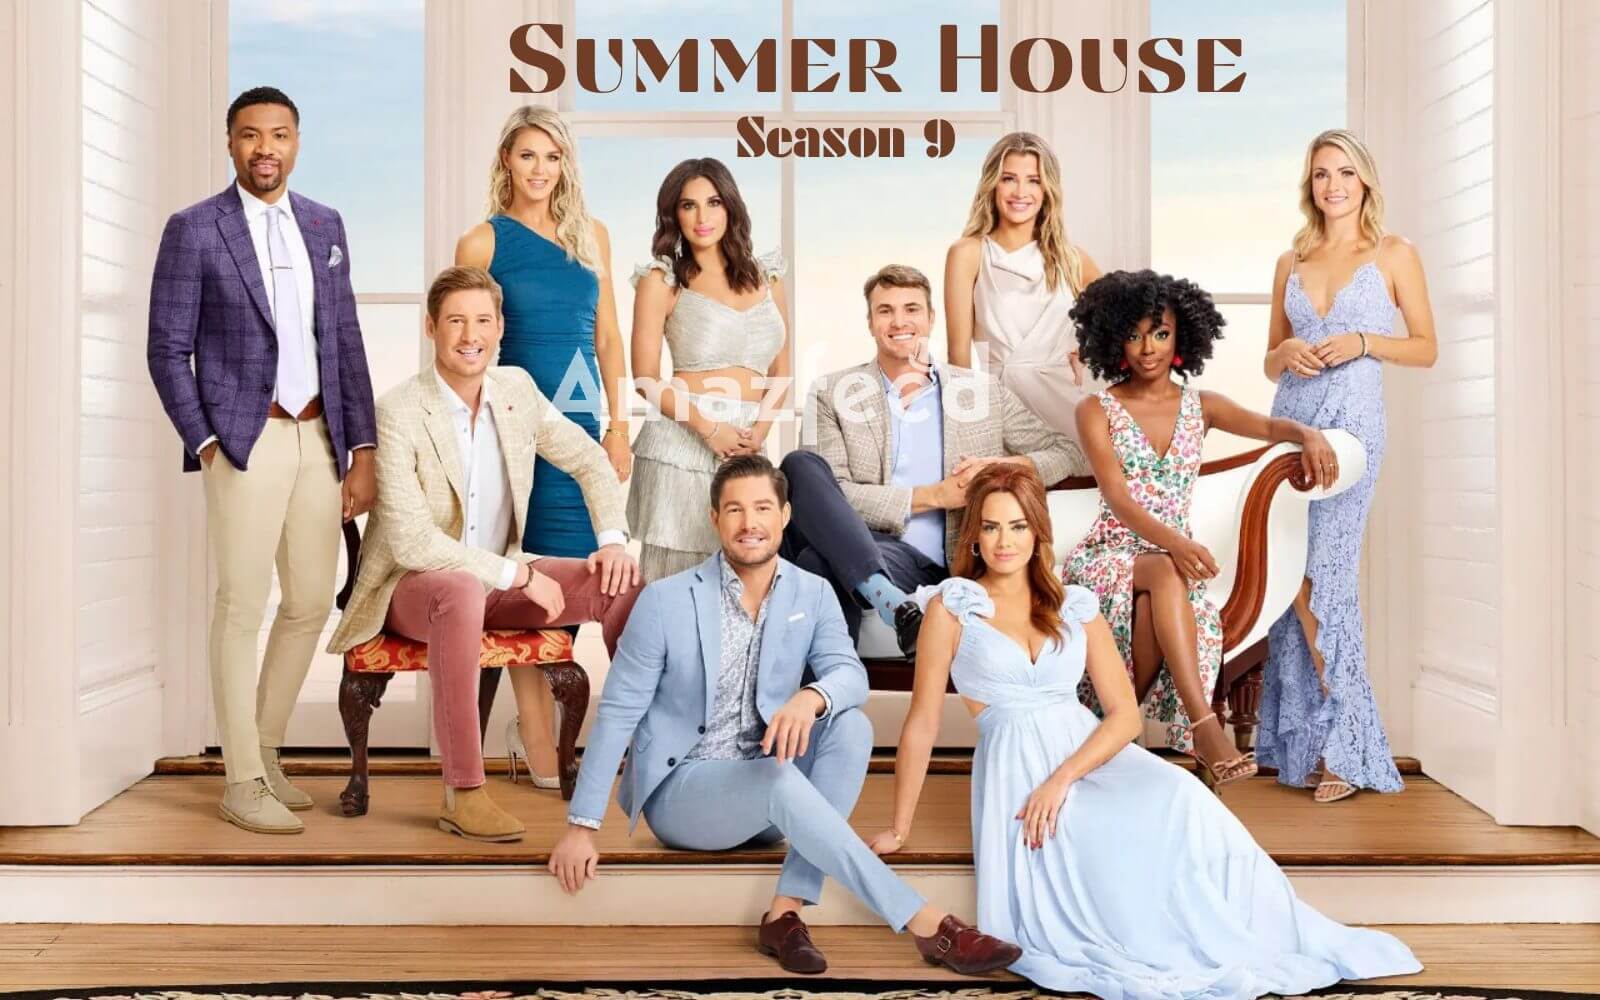 Summer House Season 9 release date